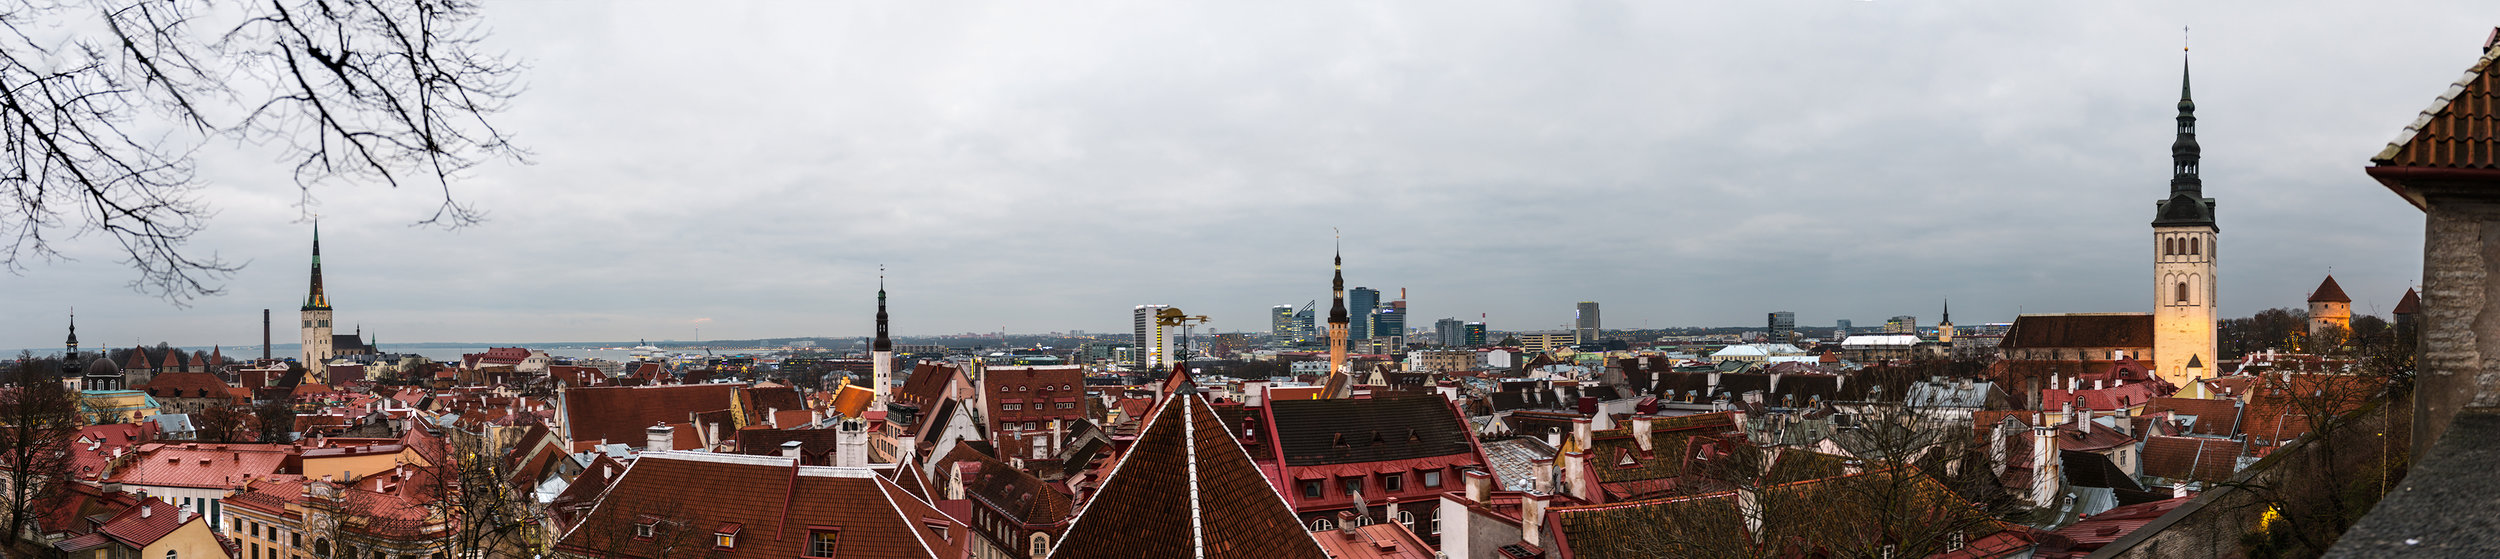 Panorama view of Tallinn from Kohtuotsa viewing platform